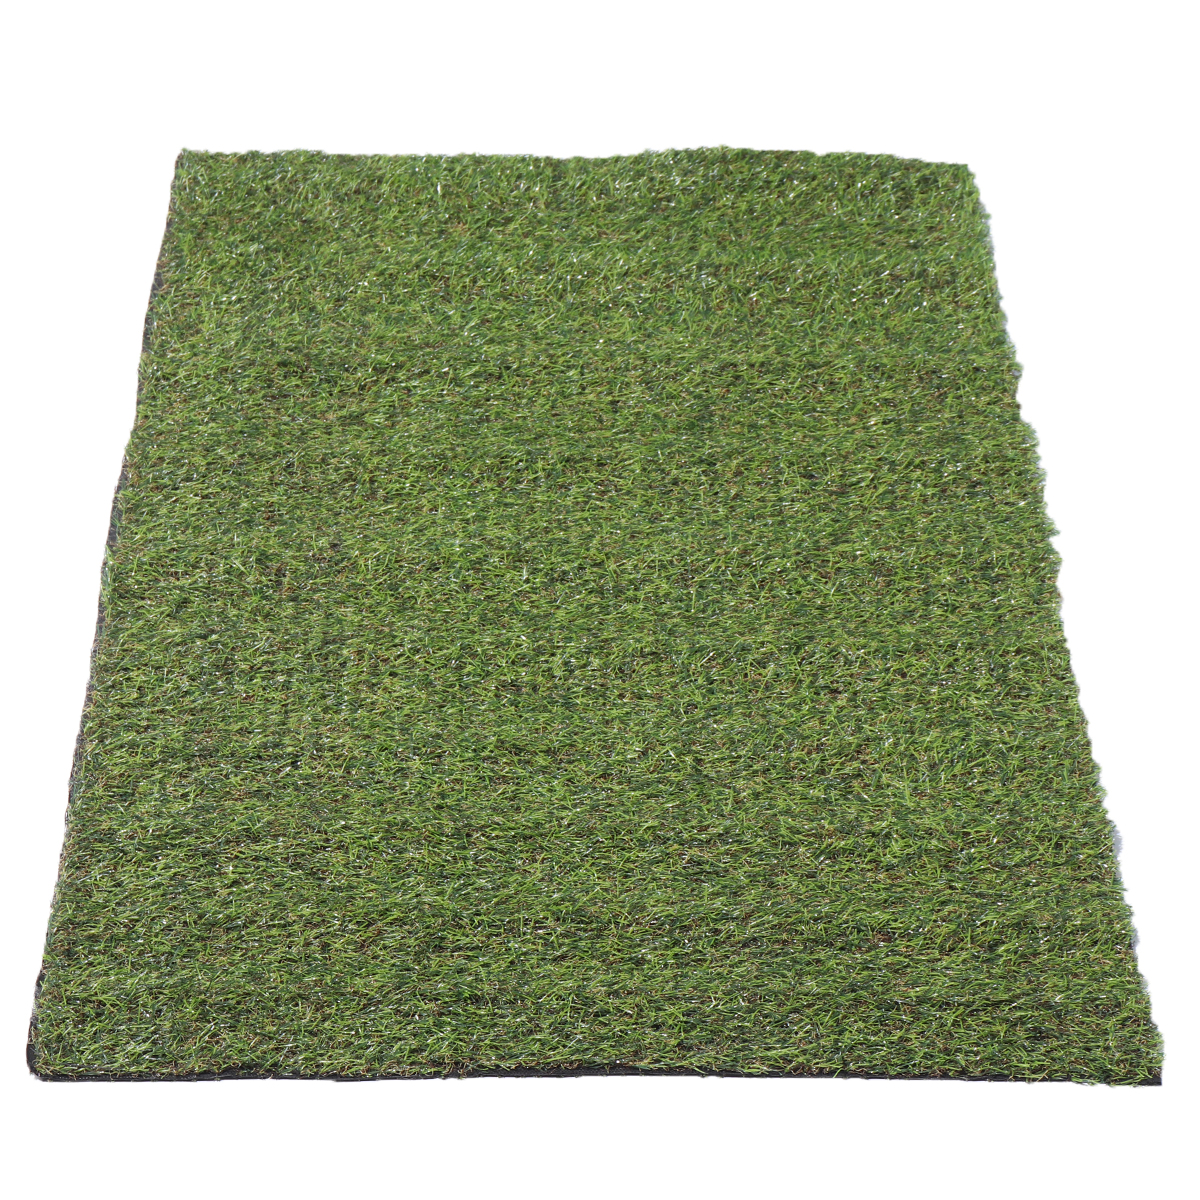 Artificial-Grass-Lawn-Turf-Synthetic-Plants-Lawn-Garden-Flooring-Decor-1702500-6